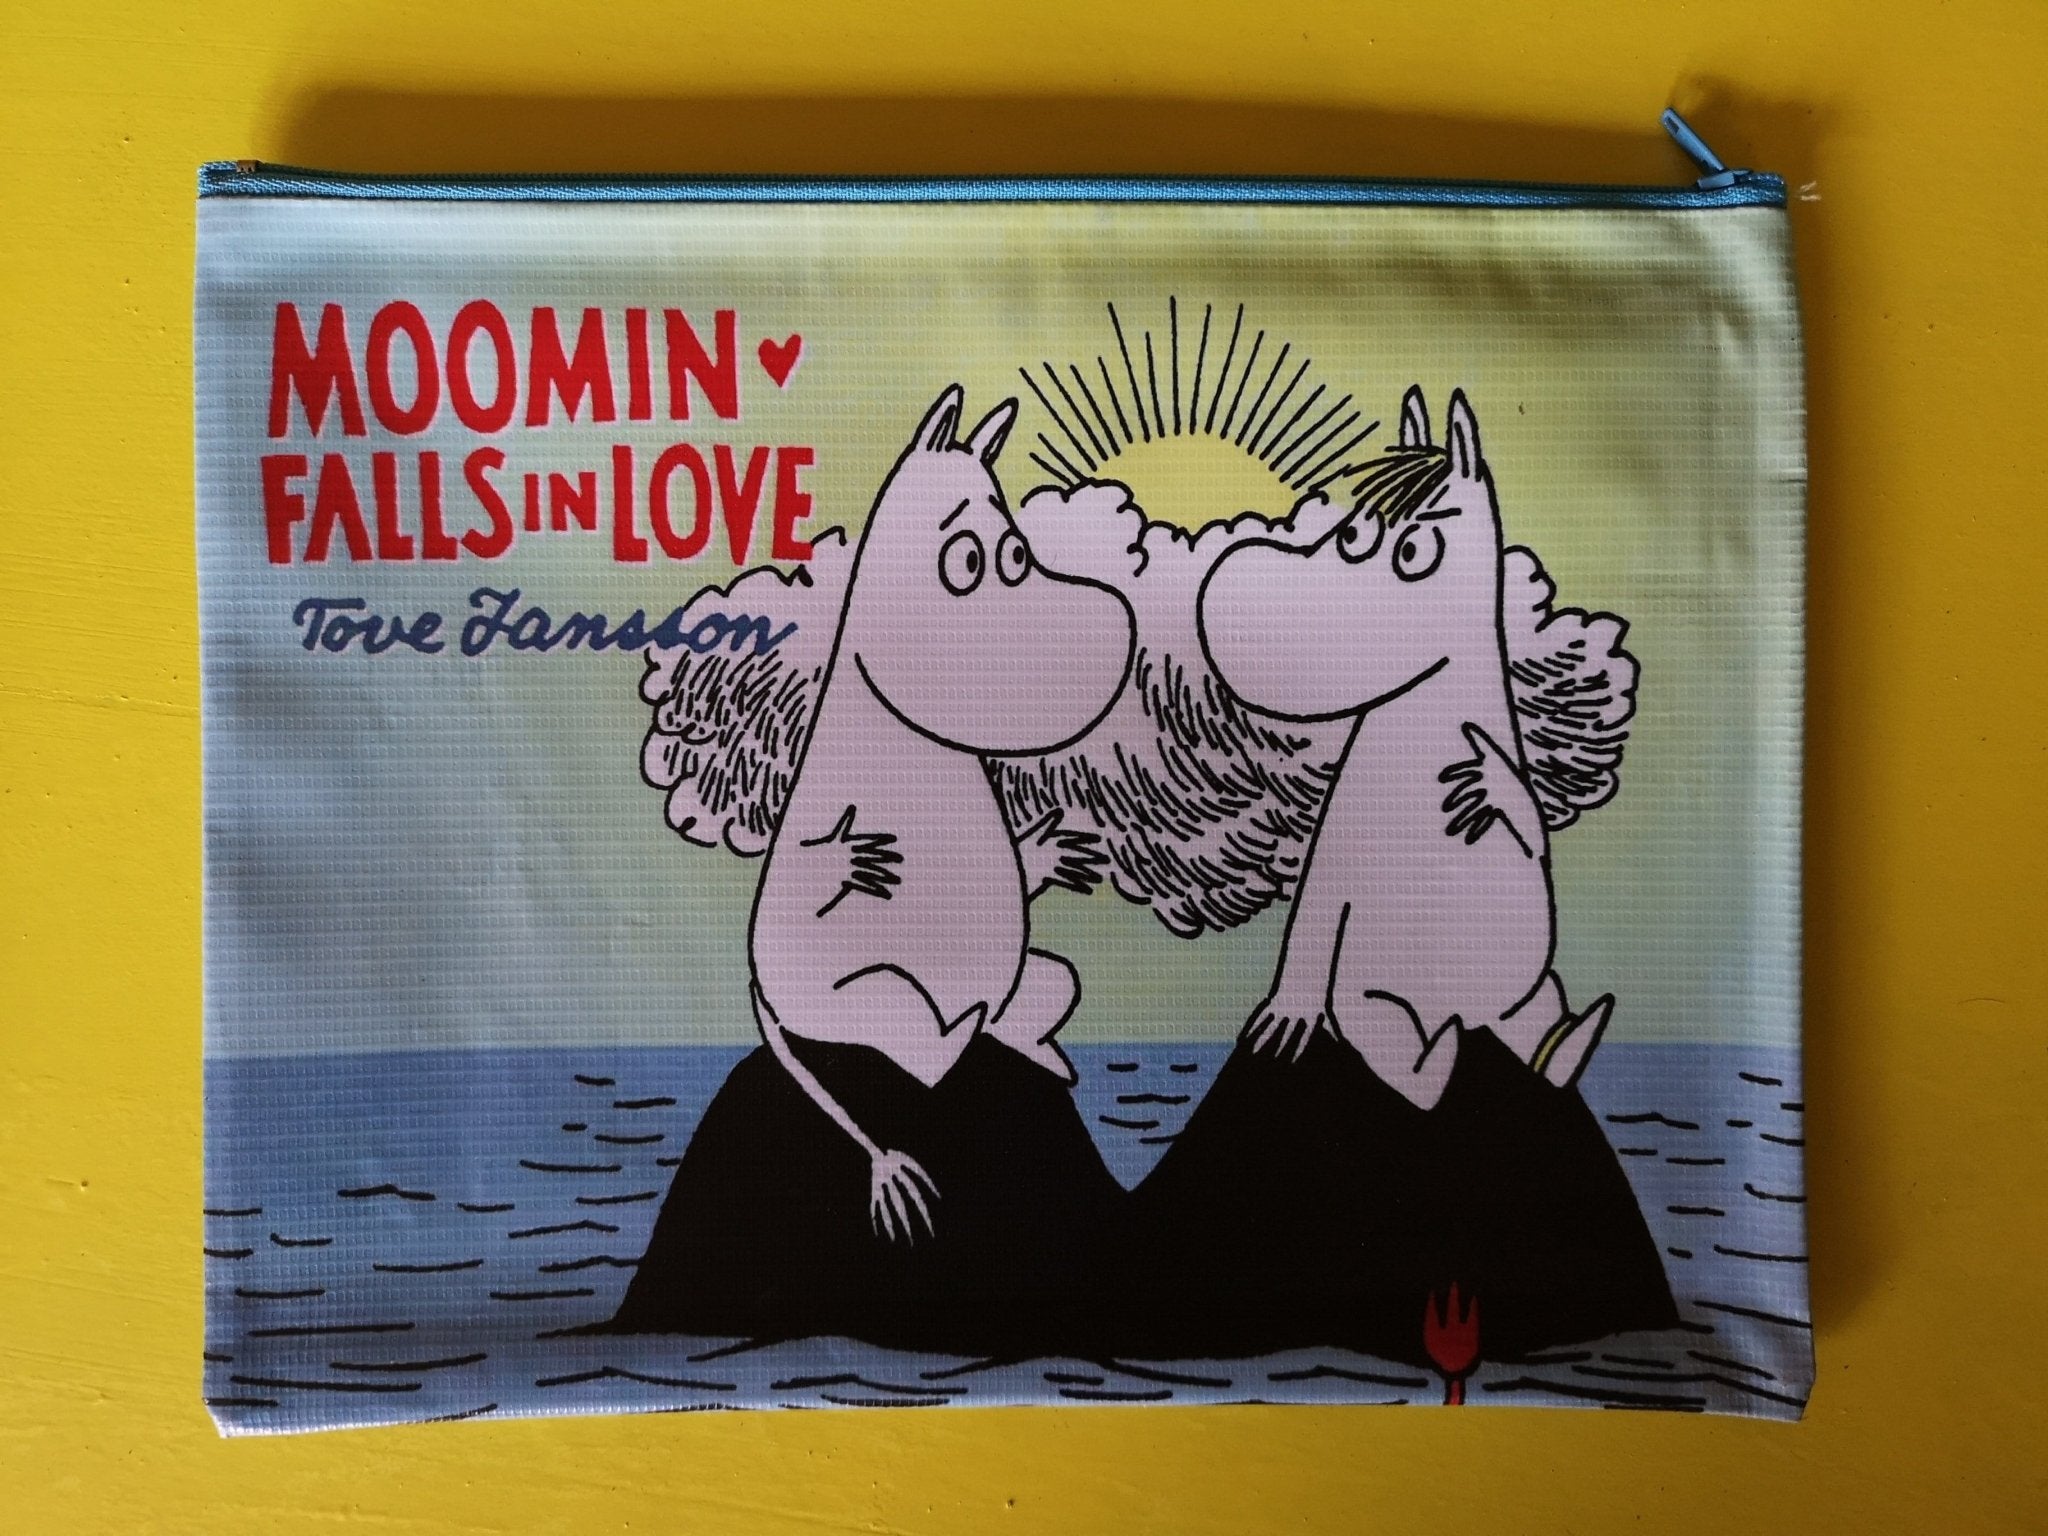 Moomin Blue Cartoon cover clutch